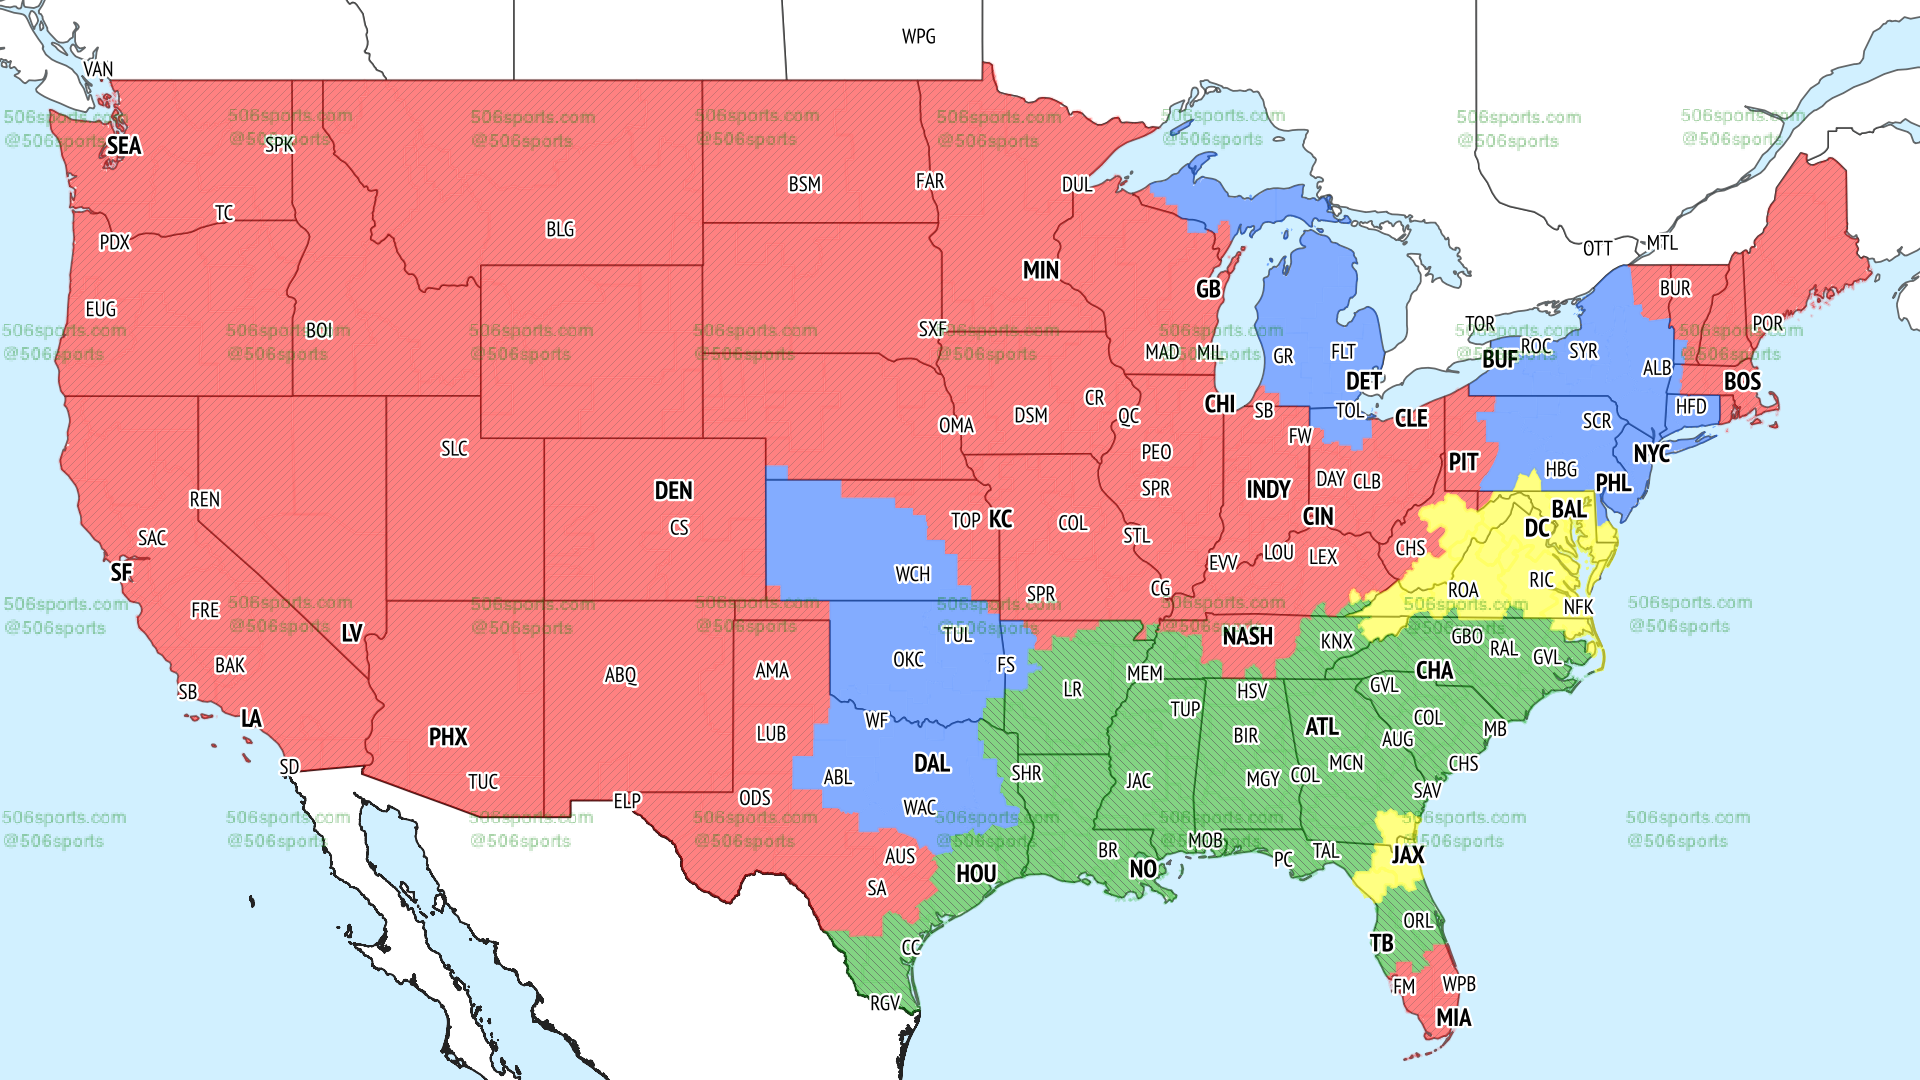 NFL Week 1 Coverage Maps